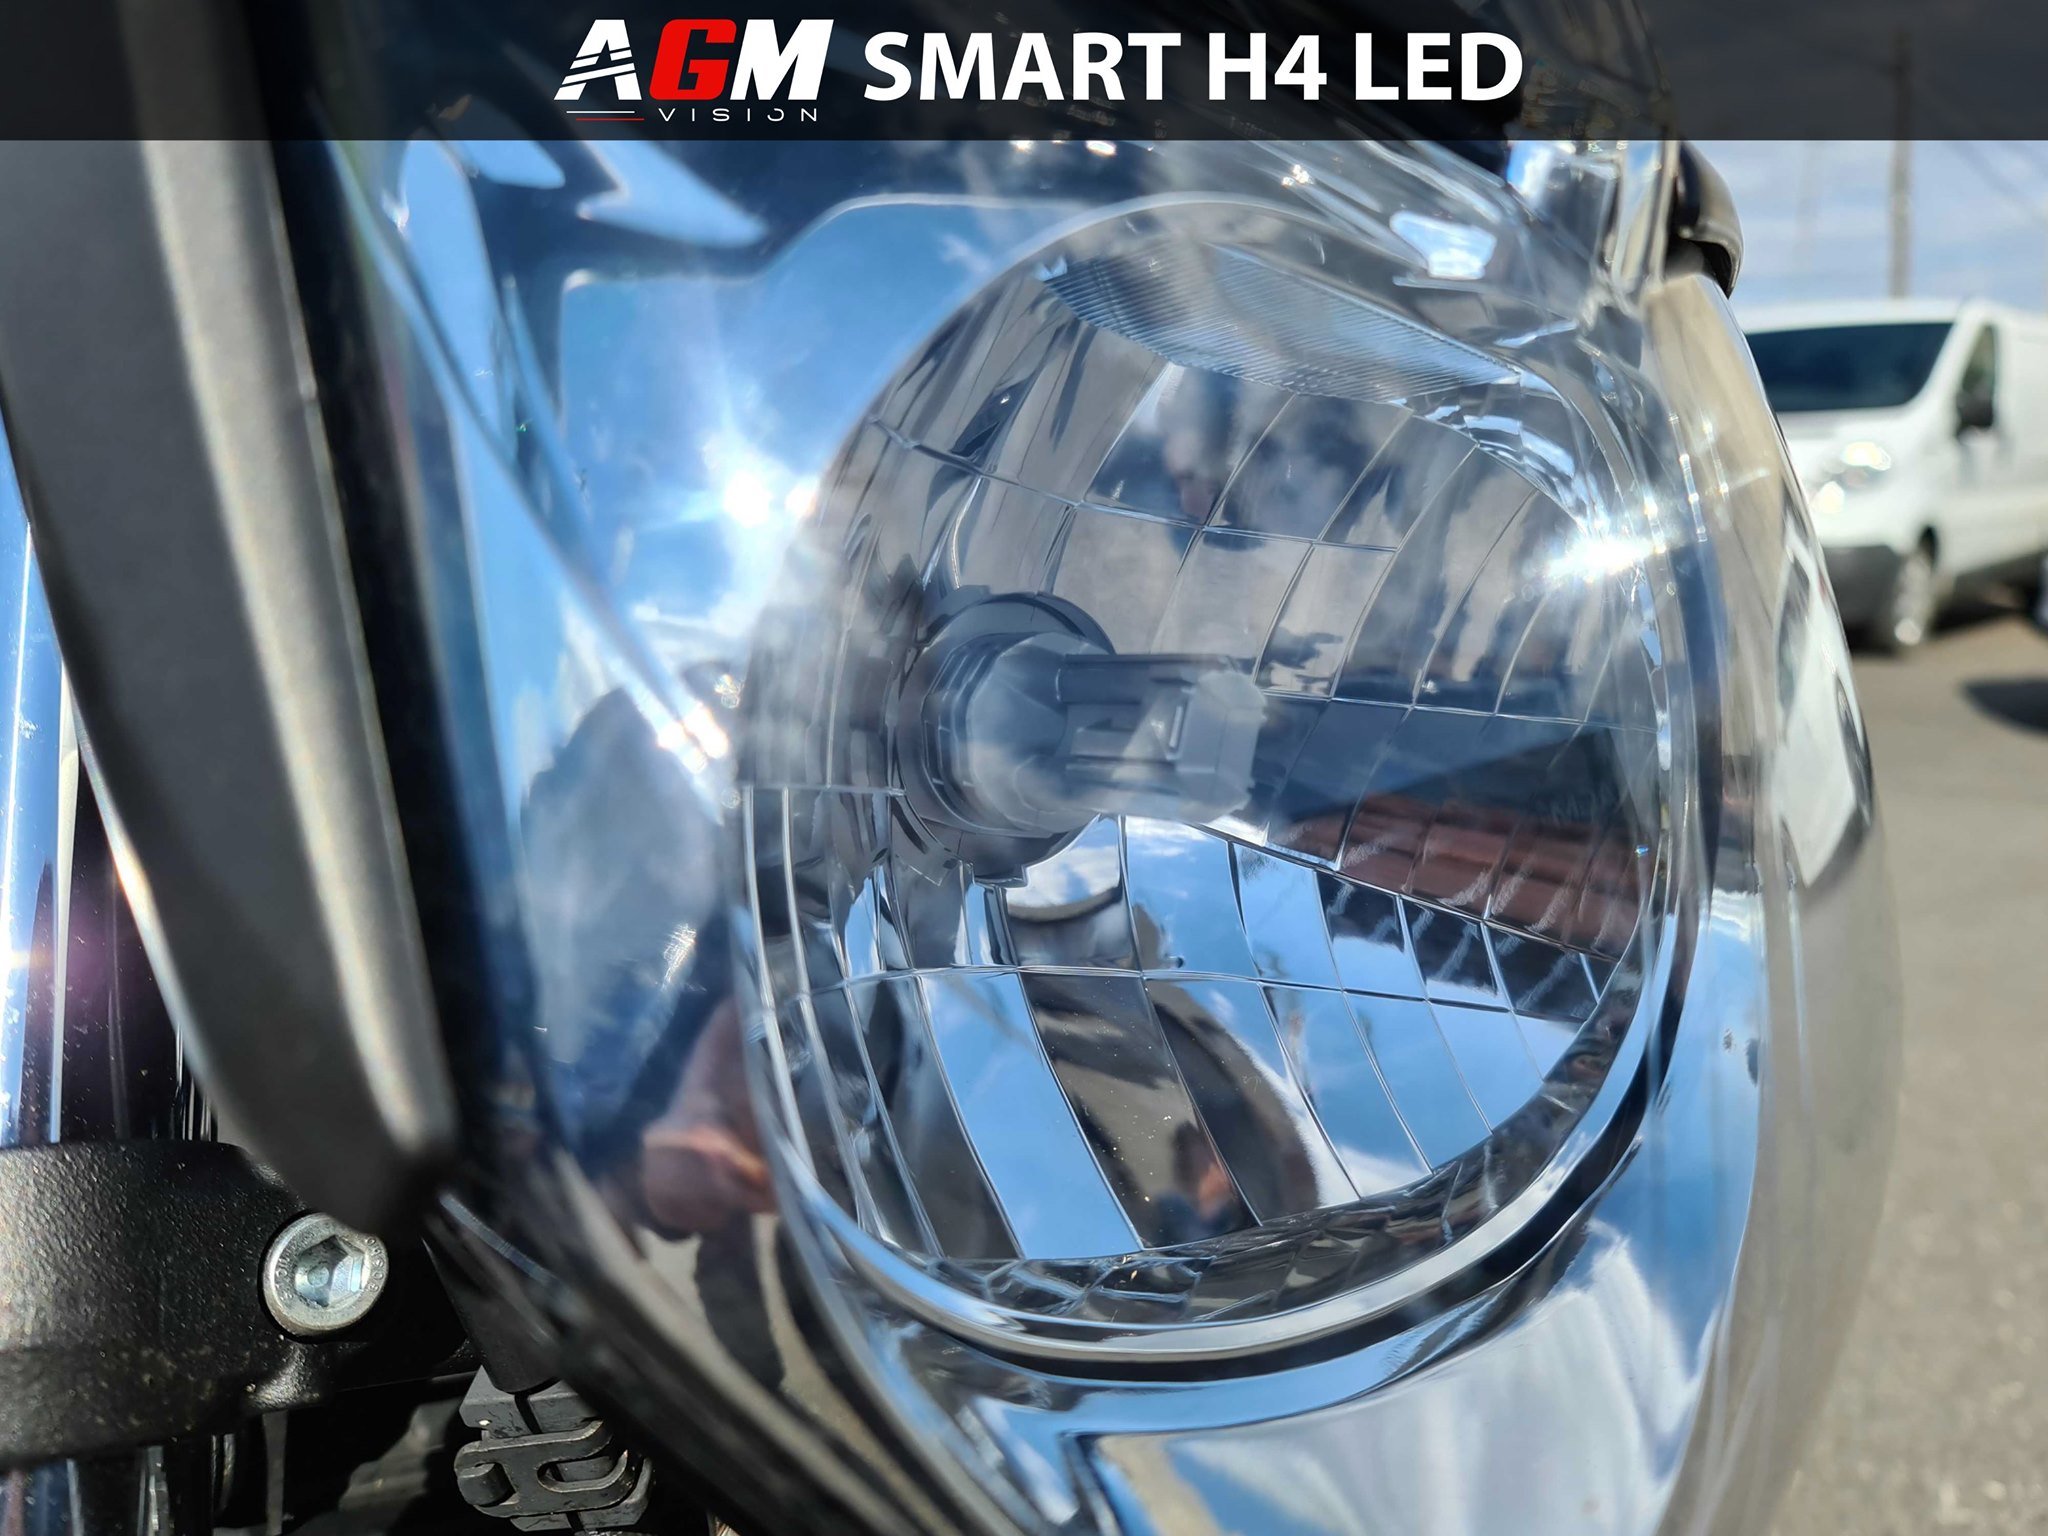 yamaha-xj600-2013-ampoule-h4-led-moto-haute-puissance-agmvision-6161b5fa74d84